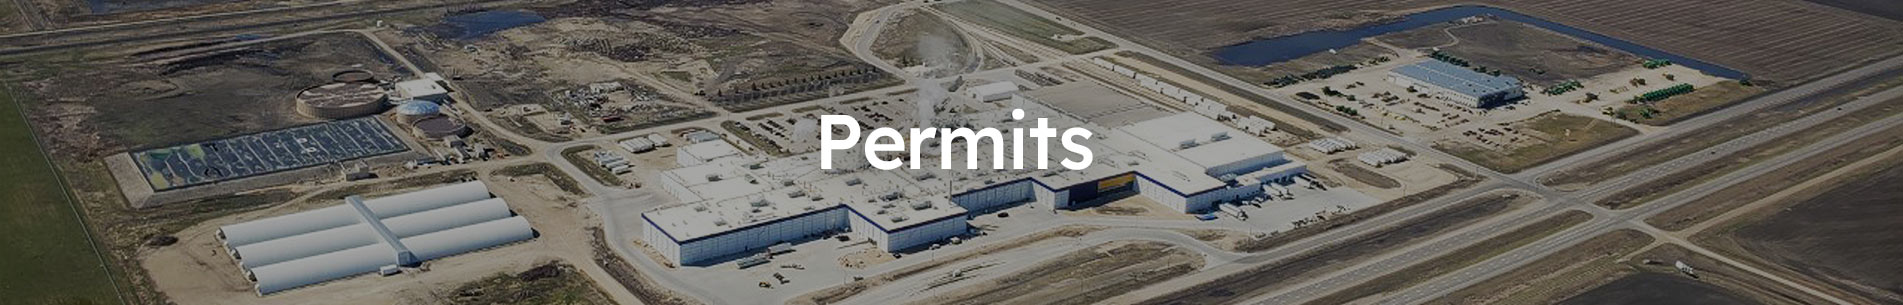 Portage la Prairie Planning District Permits